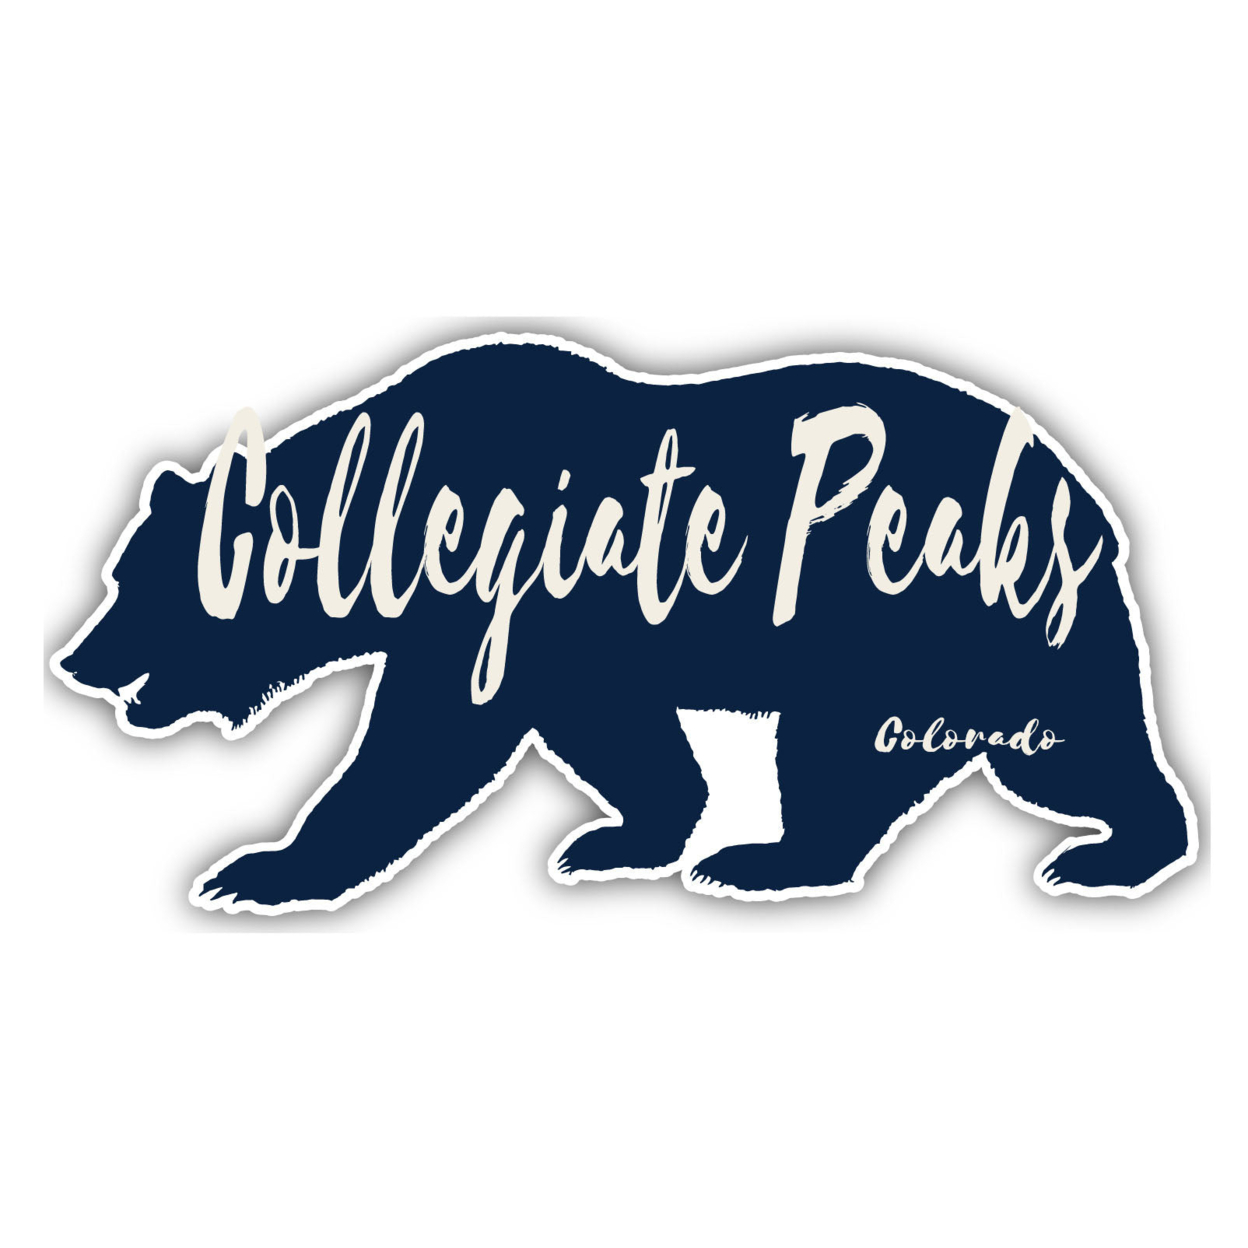 Collegiate Peaks Colorado Souvenir Decorative Stickers (Choose Theme And Size) - 4-Pack, 8-Inch, Tent